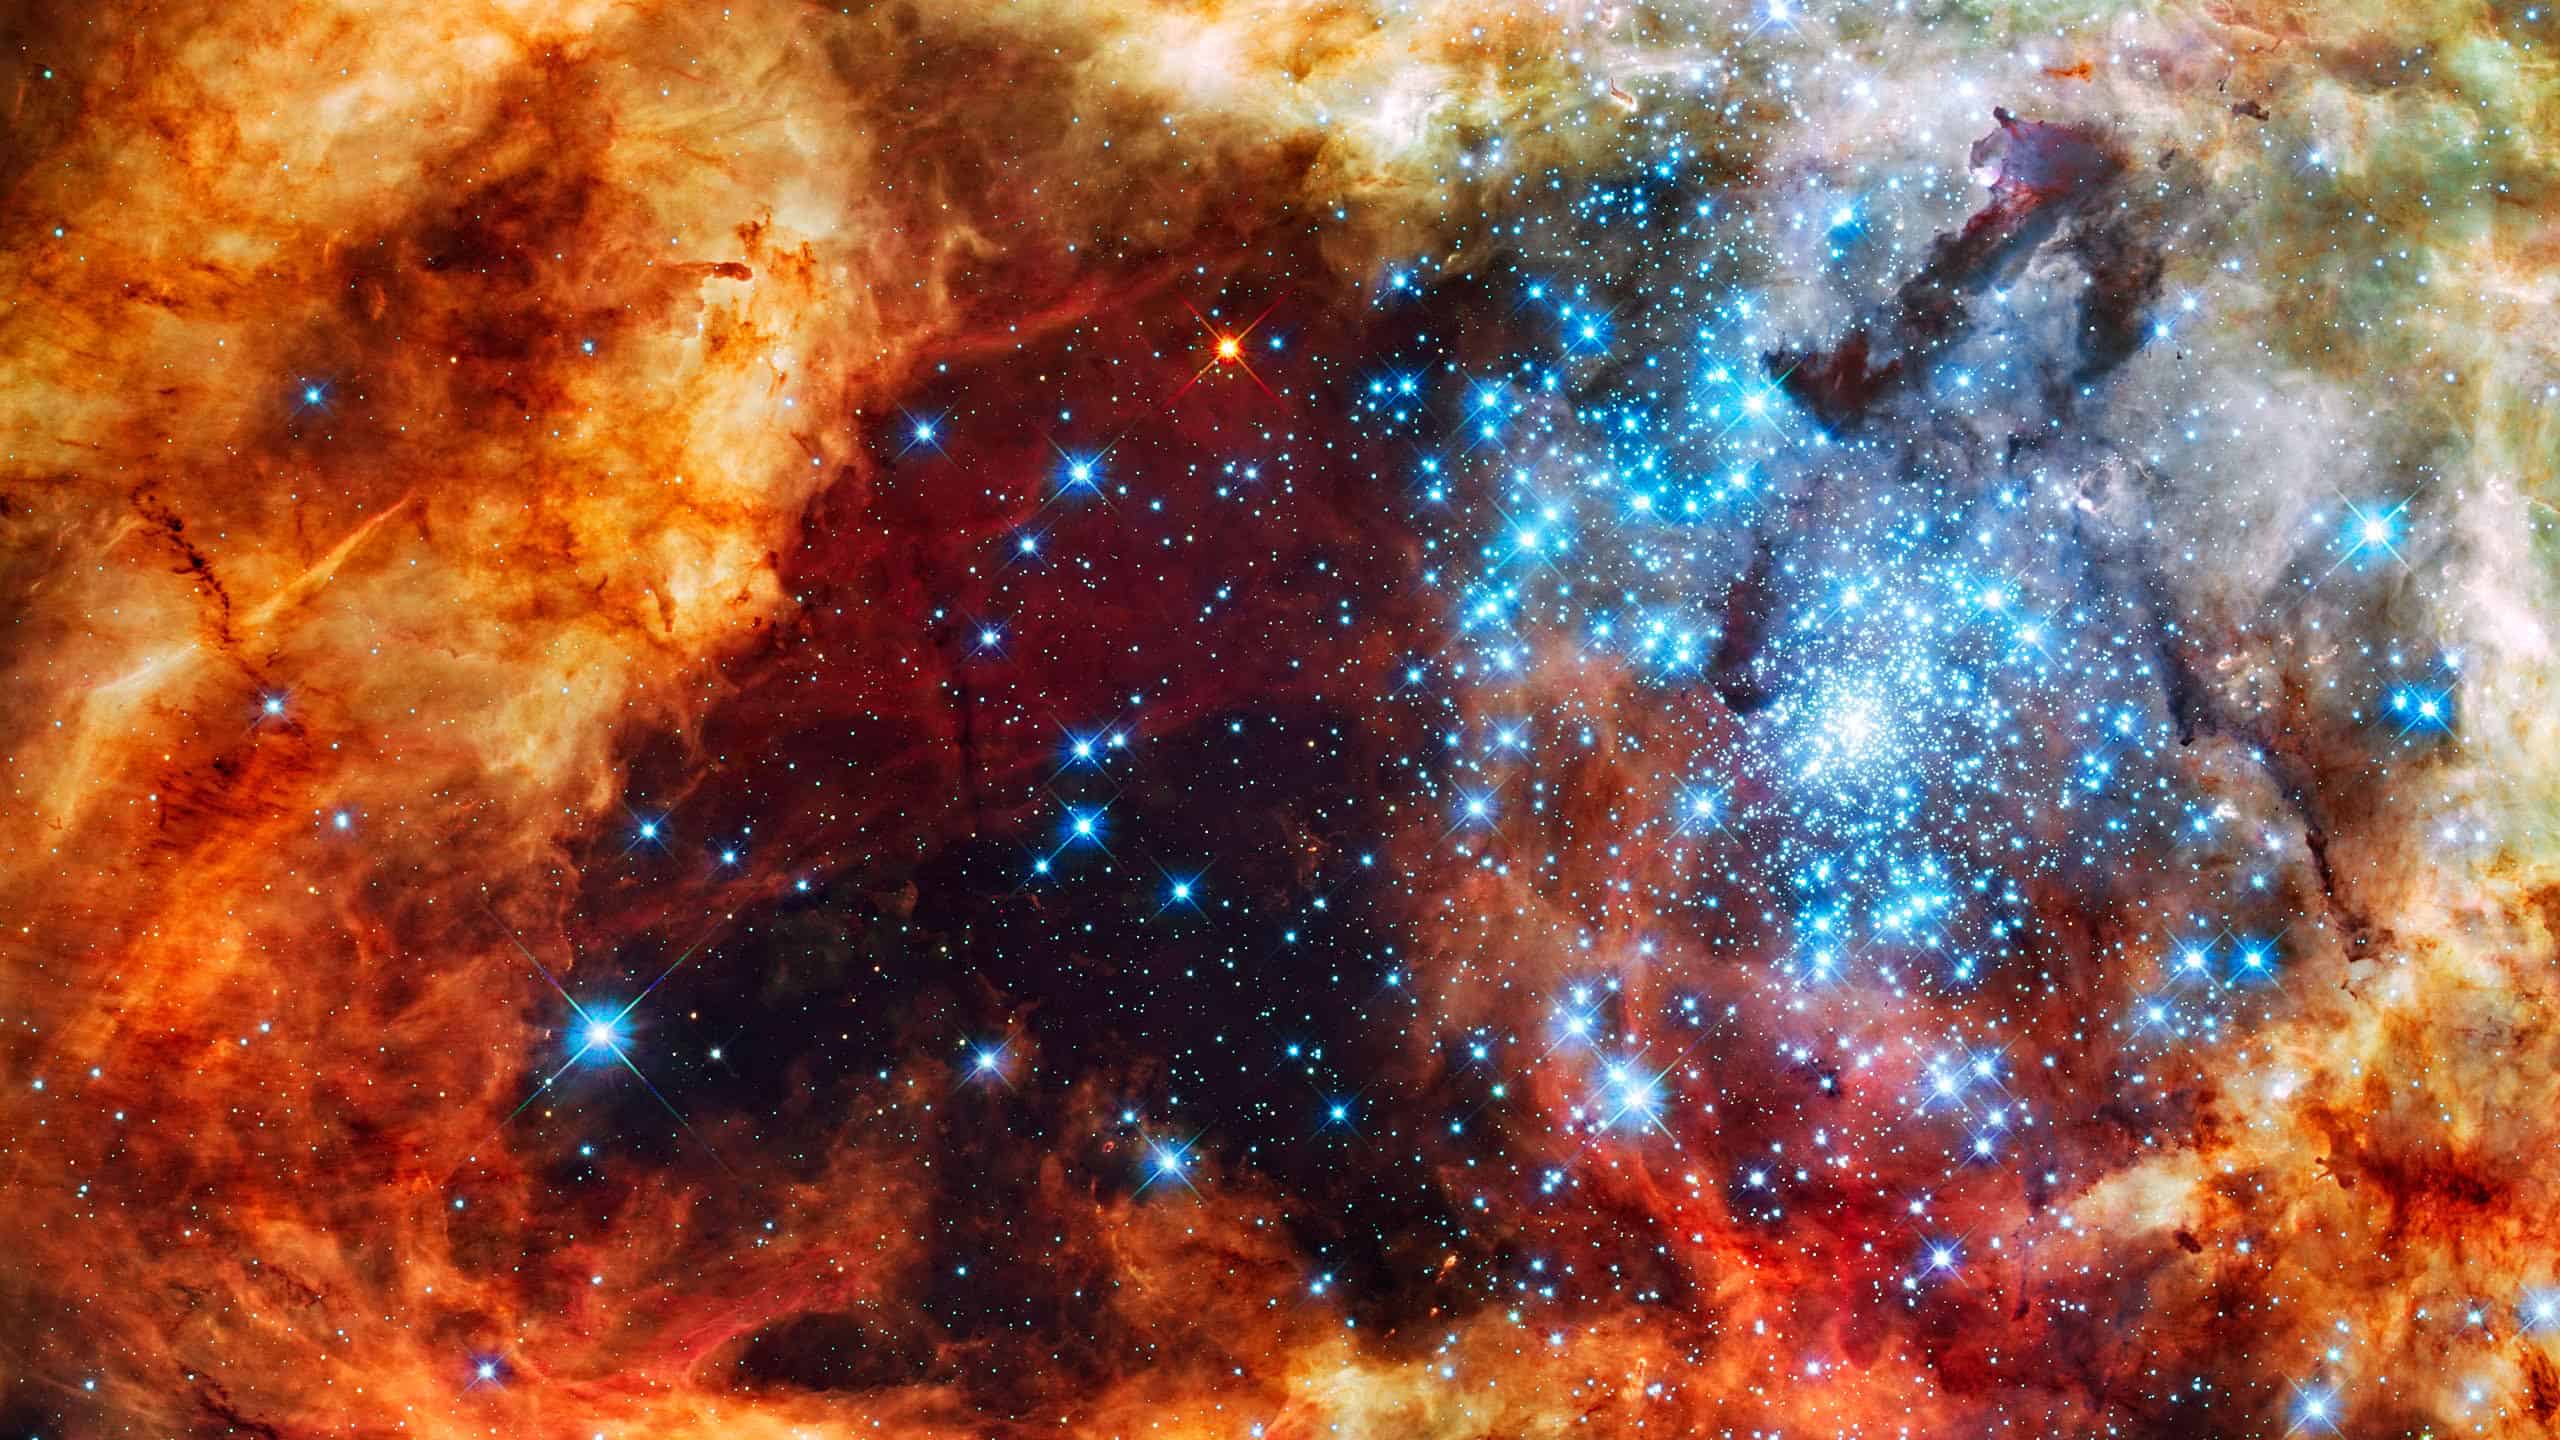 Stellar Grouping R136 30 Doradus Nebula Wqhd 1440p HD Wallpapers Download Free Images Wallpaper [wallpaper981.blogspot.com]